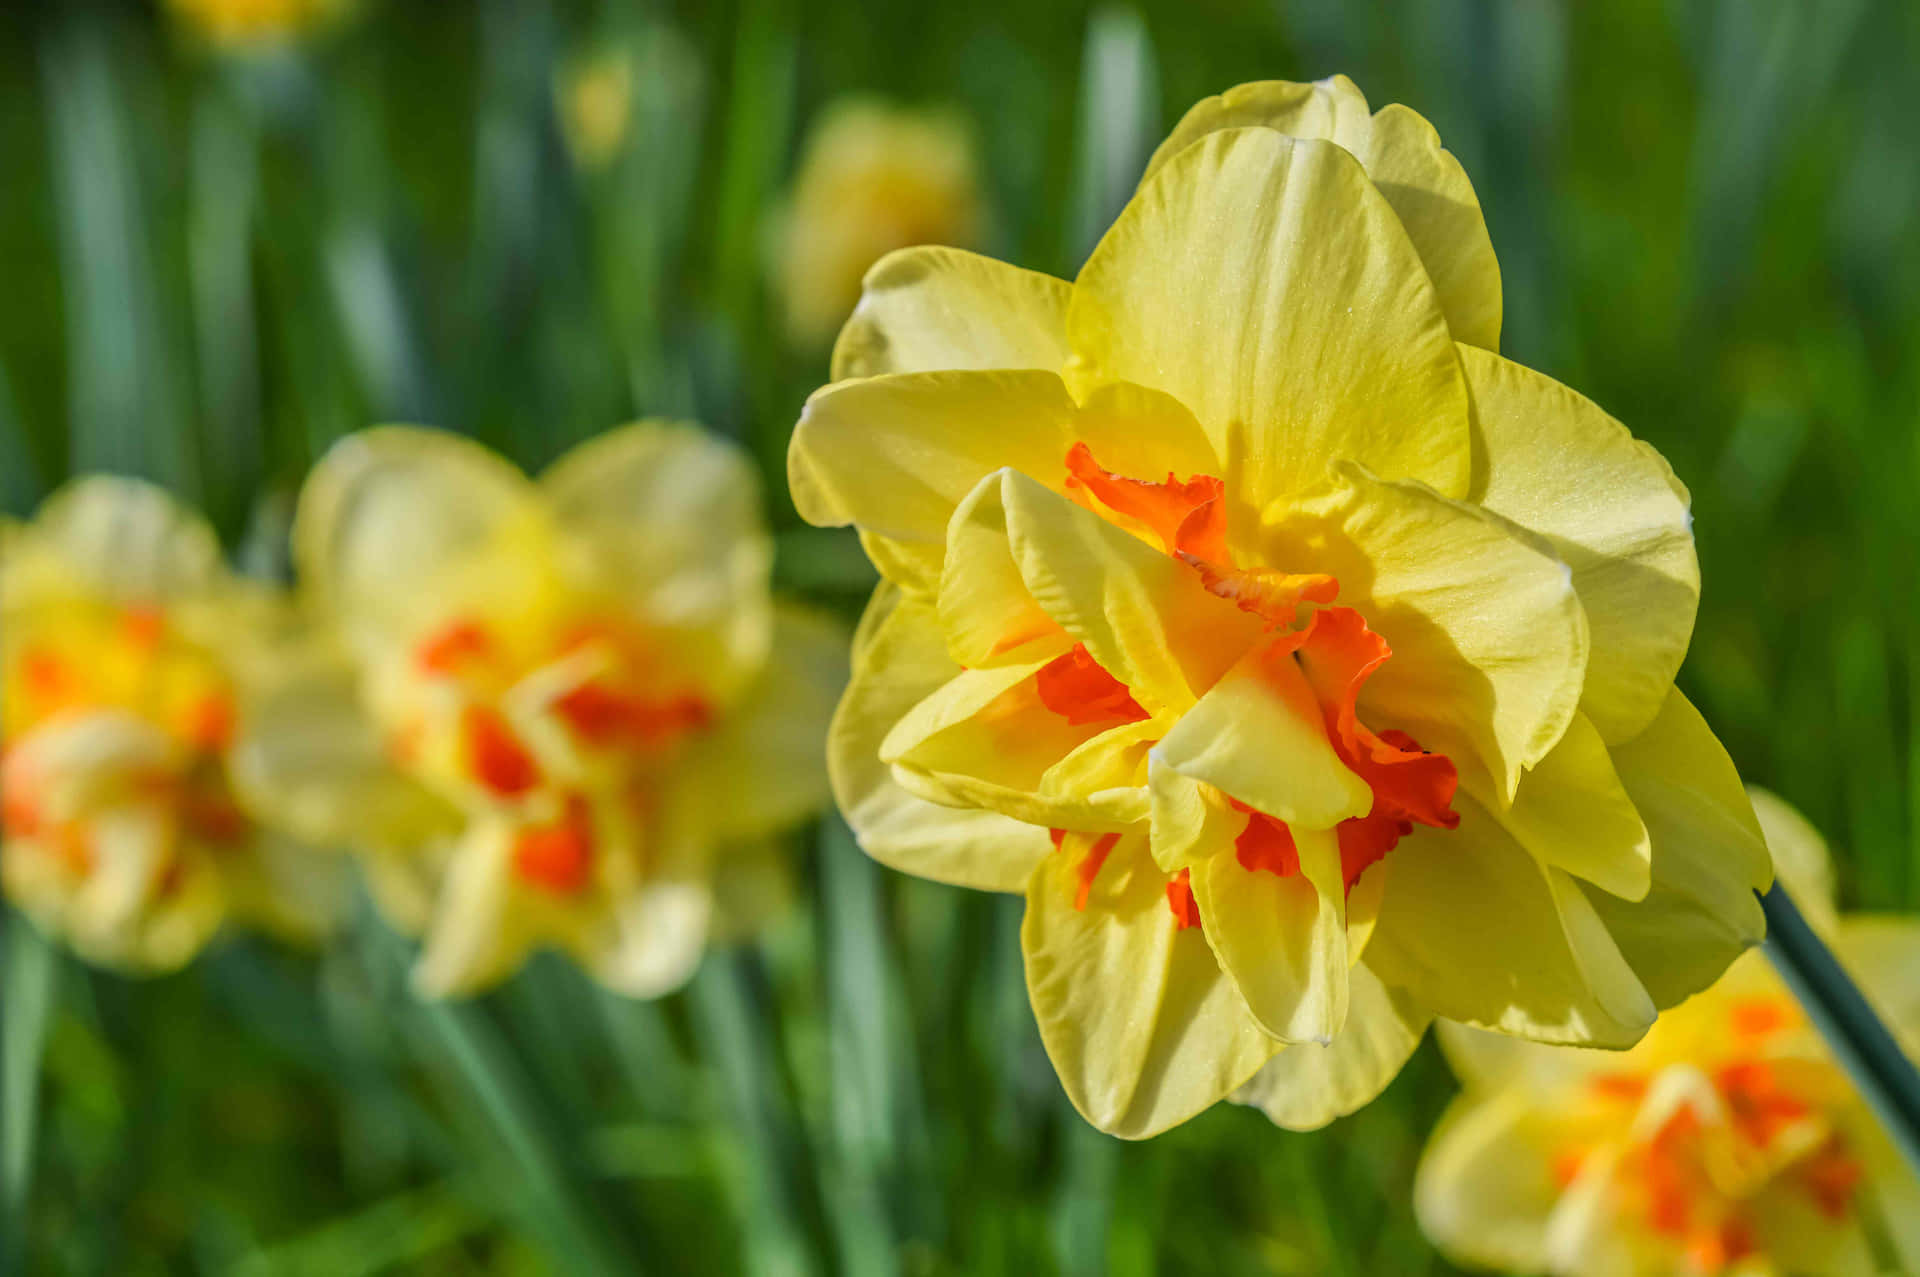 A bright sunlit yellow daffodil in full bloom